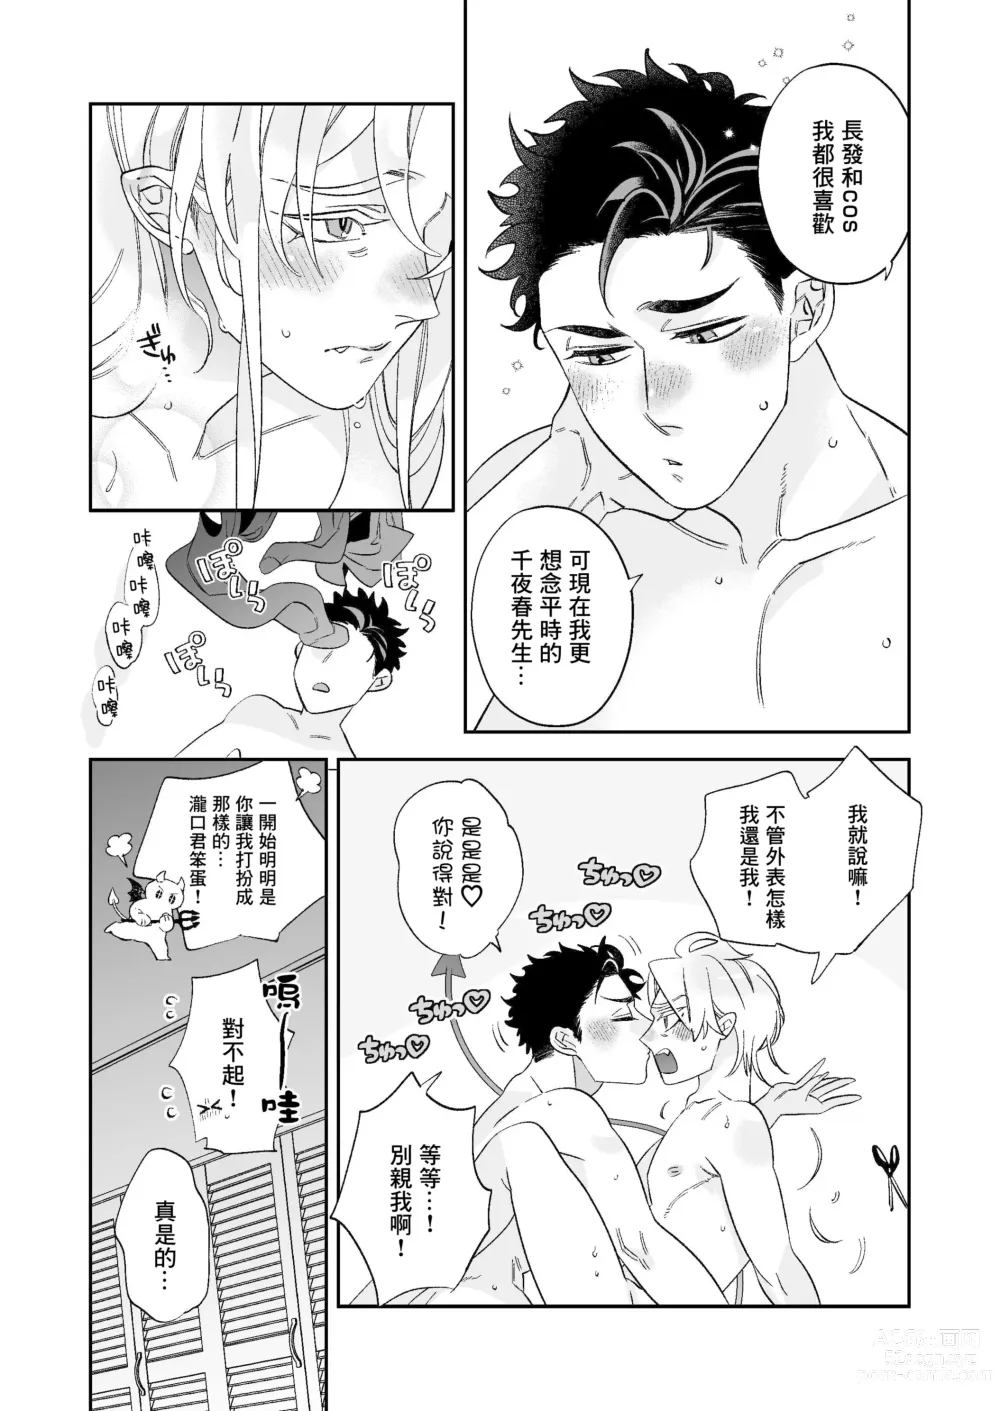 Page 19 of manga 心爱的退役×阳痿×淫魔前辈, 让我来治好你吧? 番外